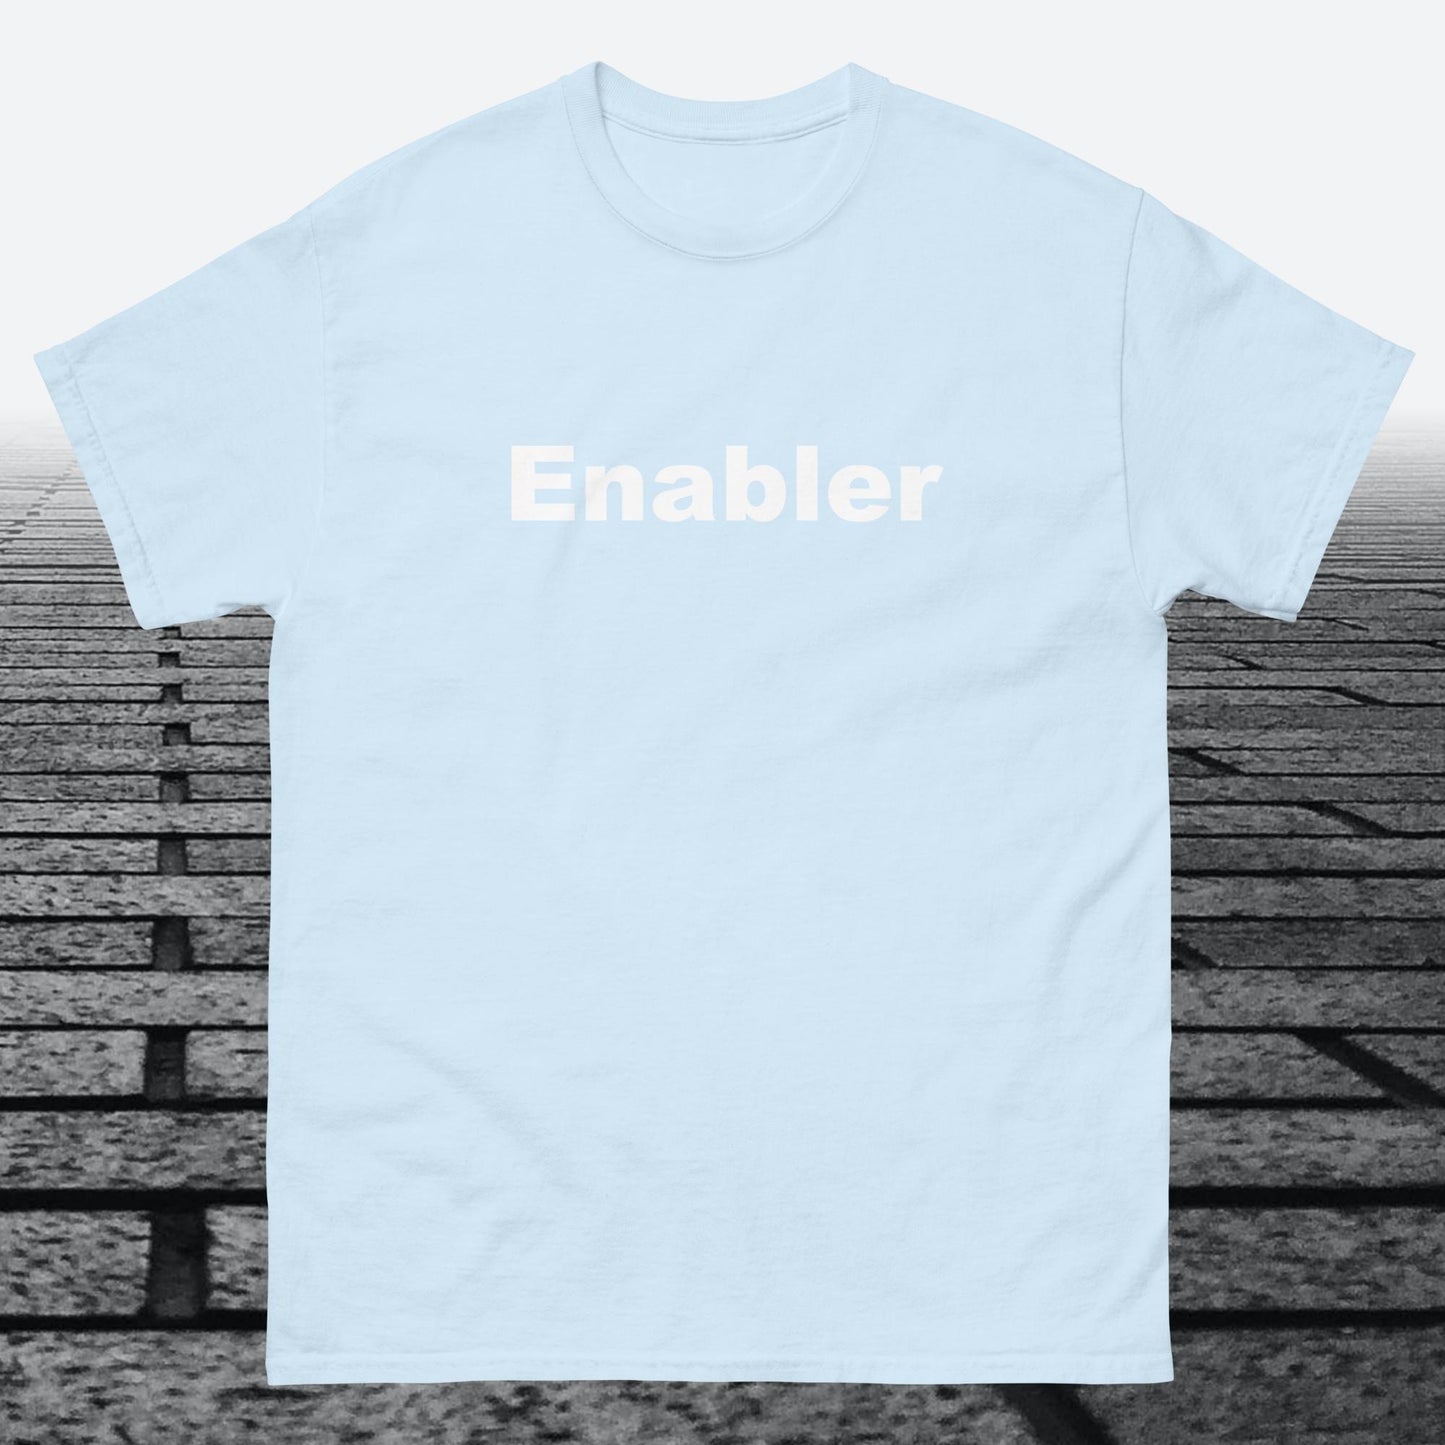 Enabler, Cotton T-shirt